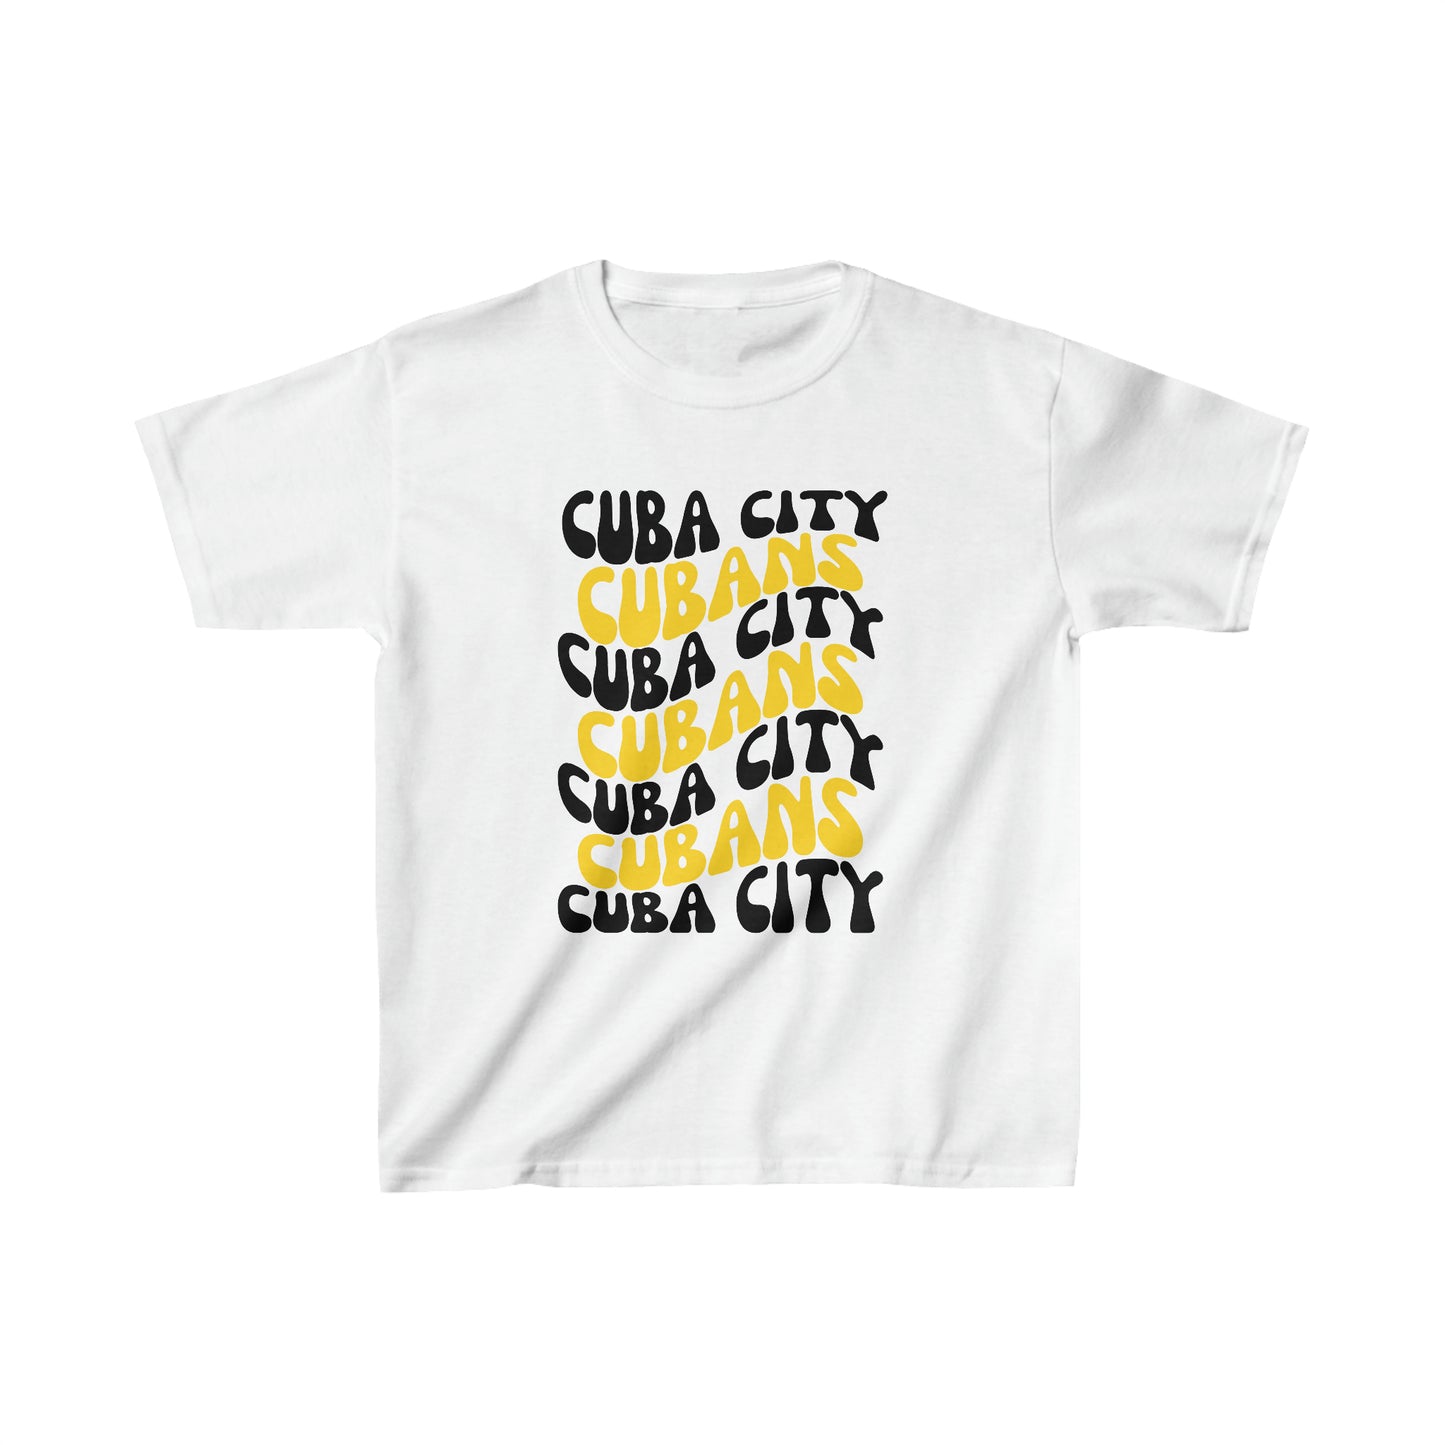 Cuba City Cubans - Kids T-Shirt